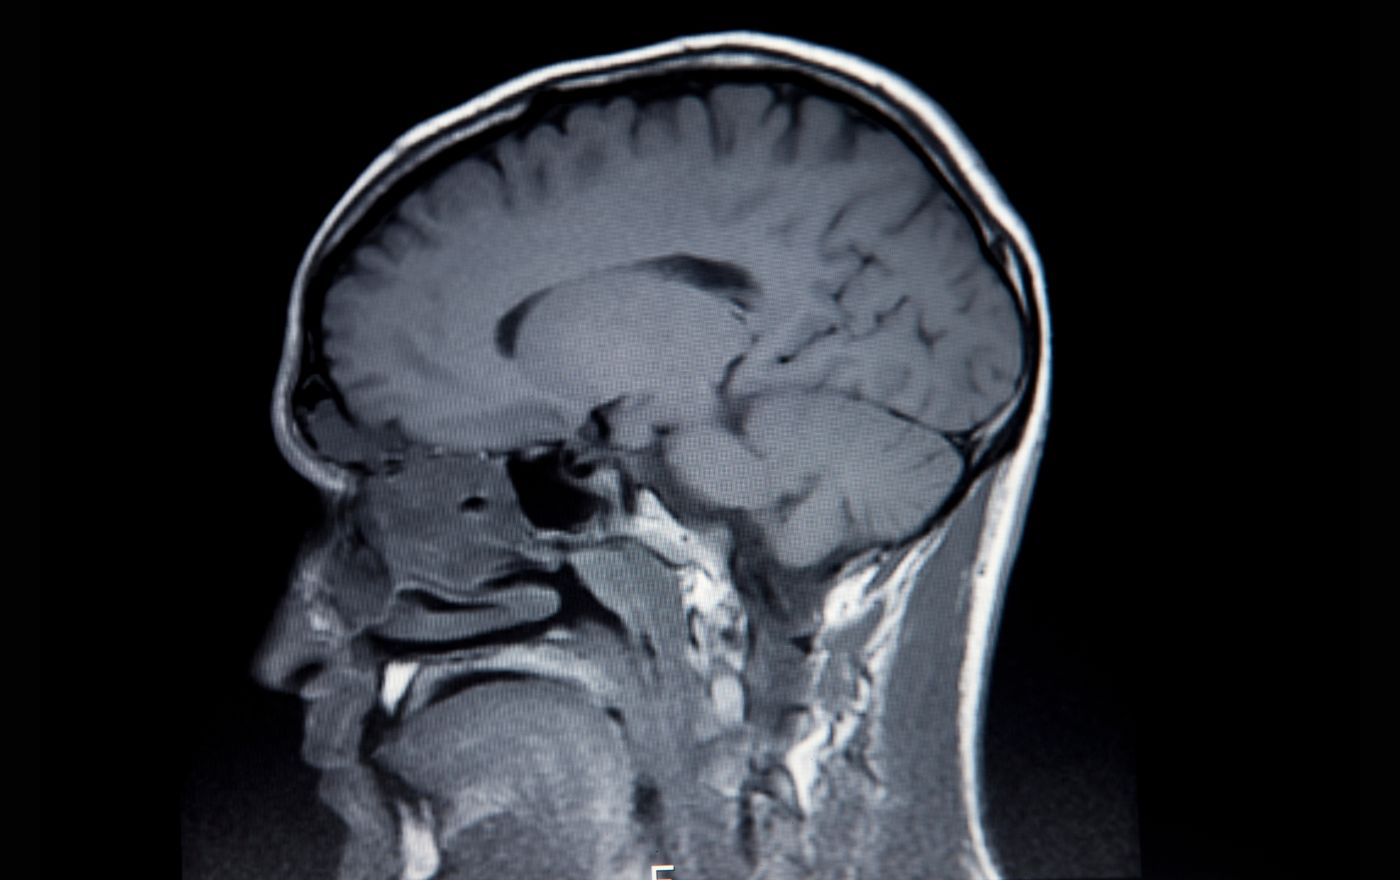 brain imaging techniques